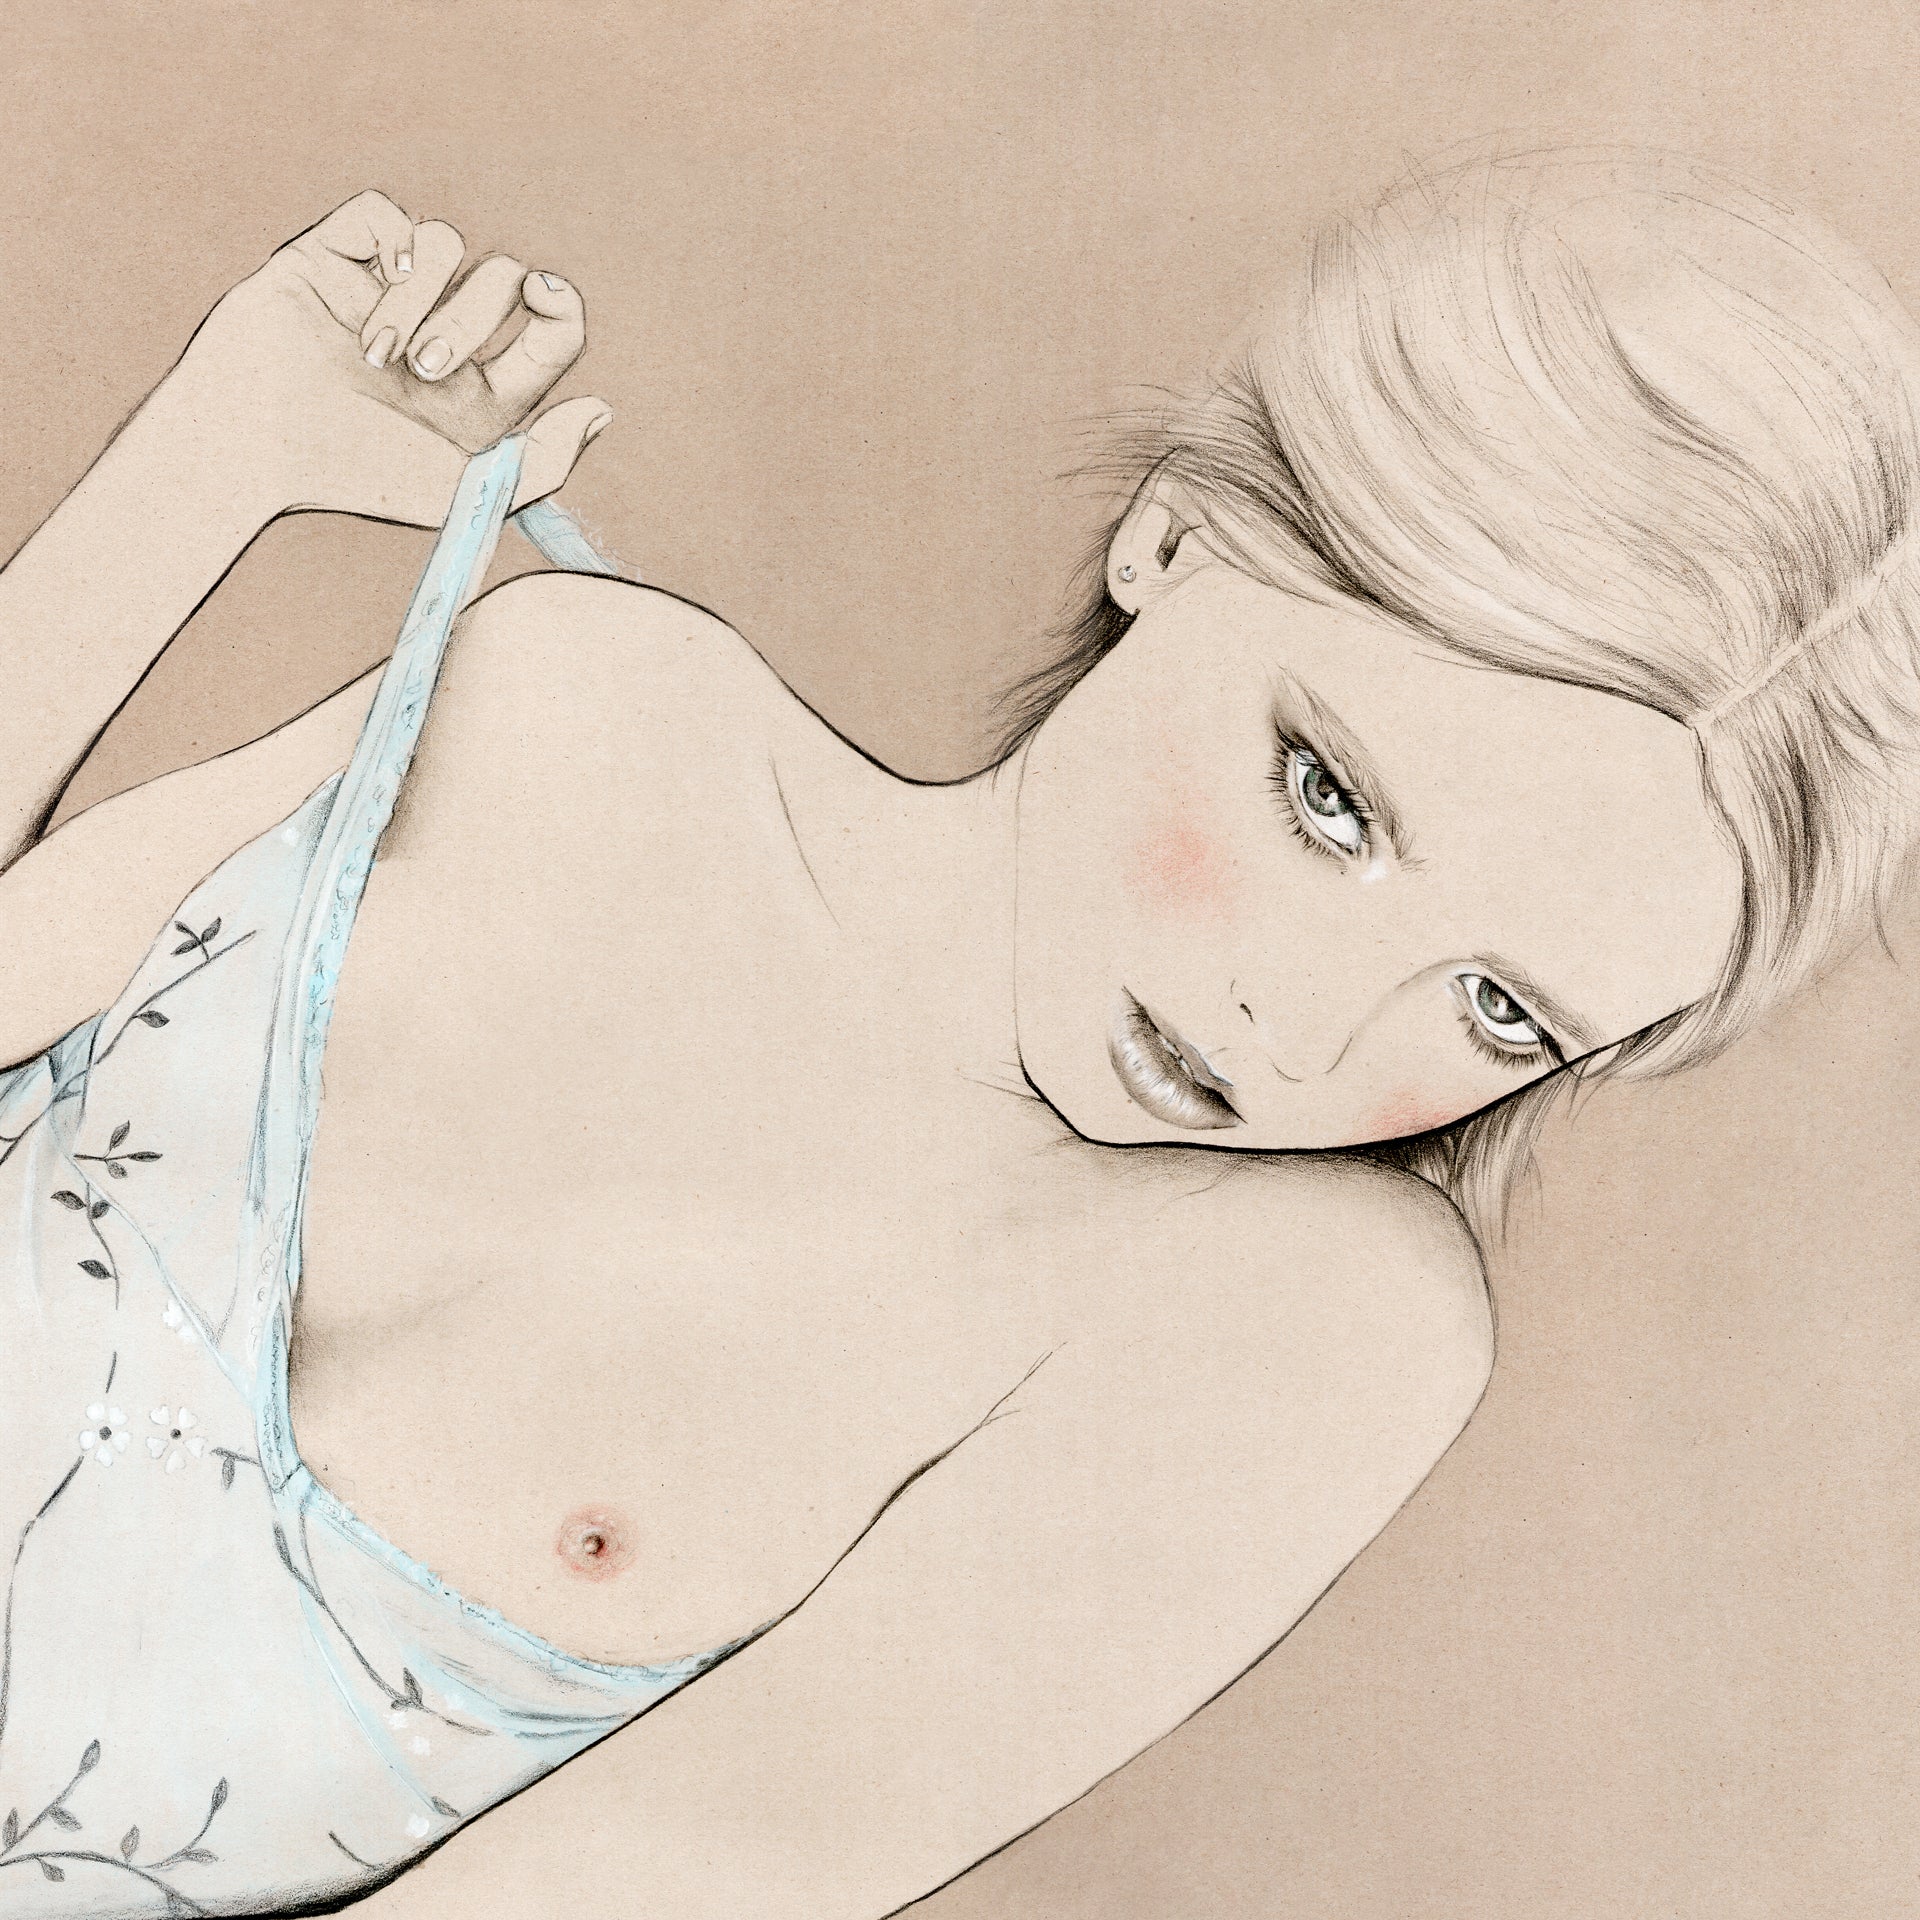 Nude girl illustration fashion illustration by Melbourne based illustrator Kelly Thompson